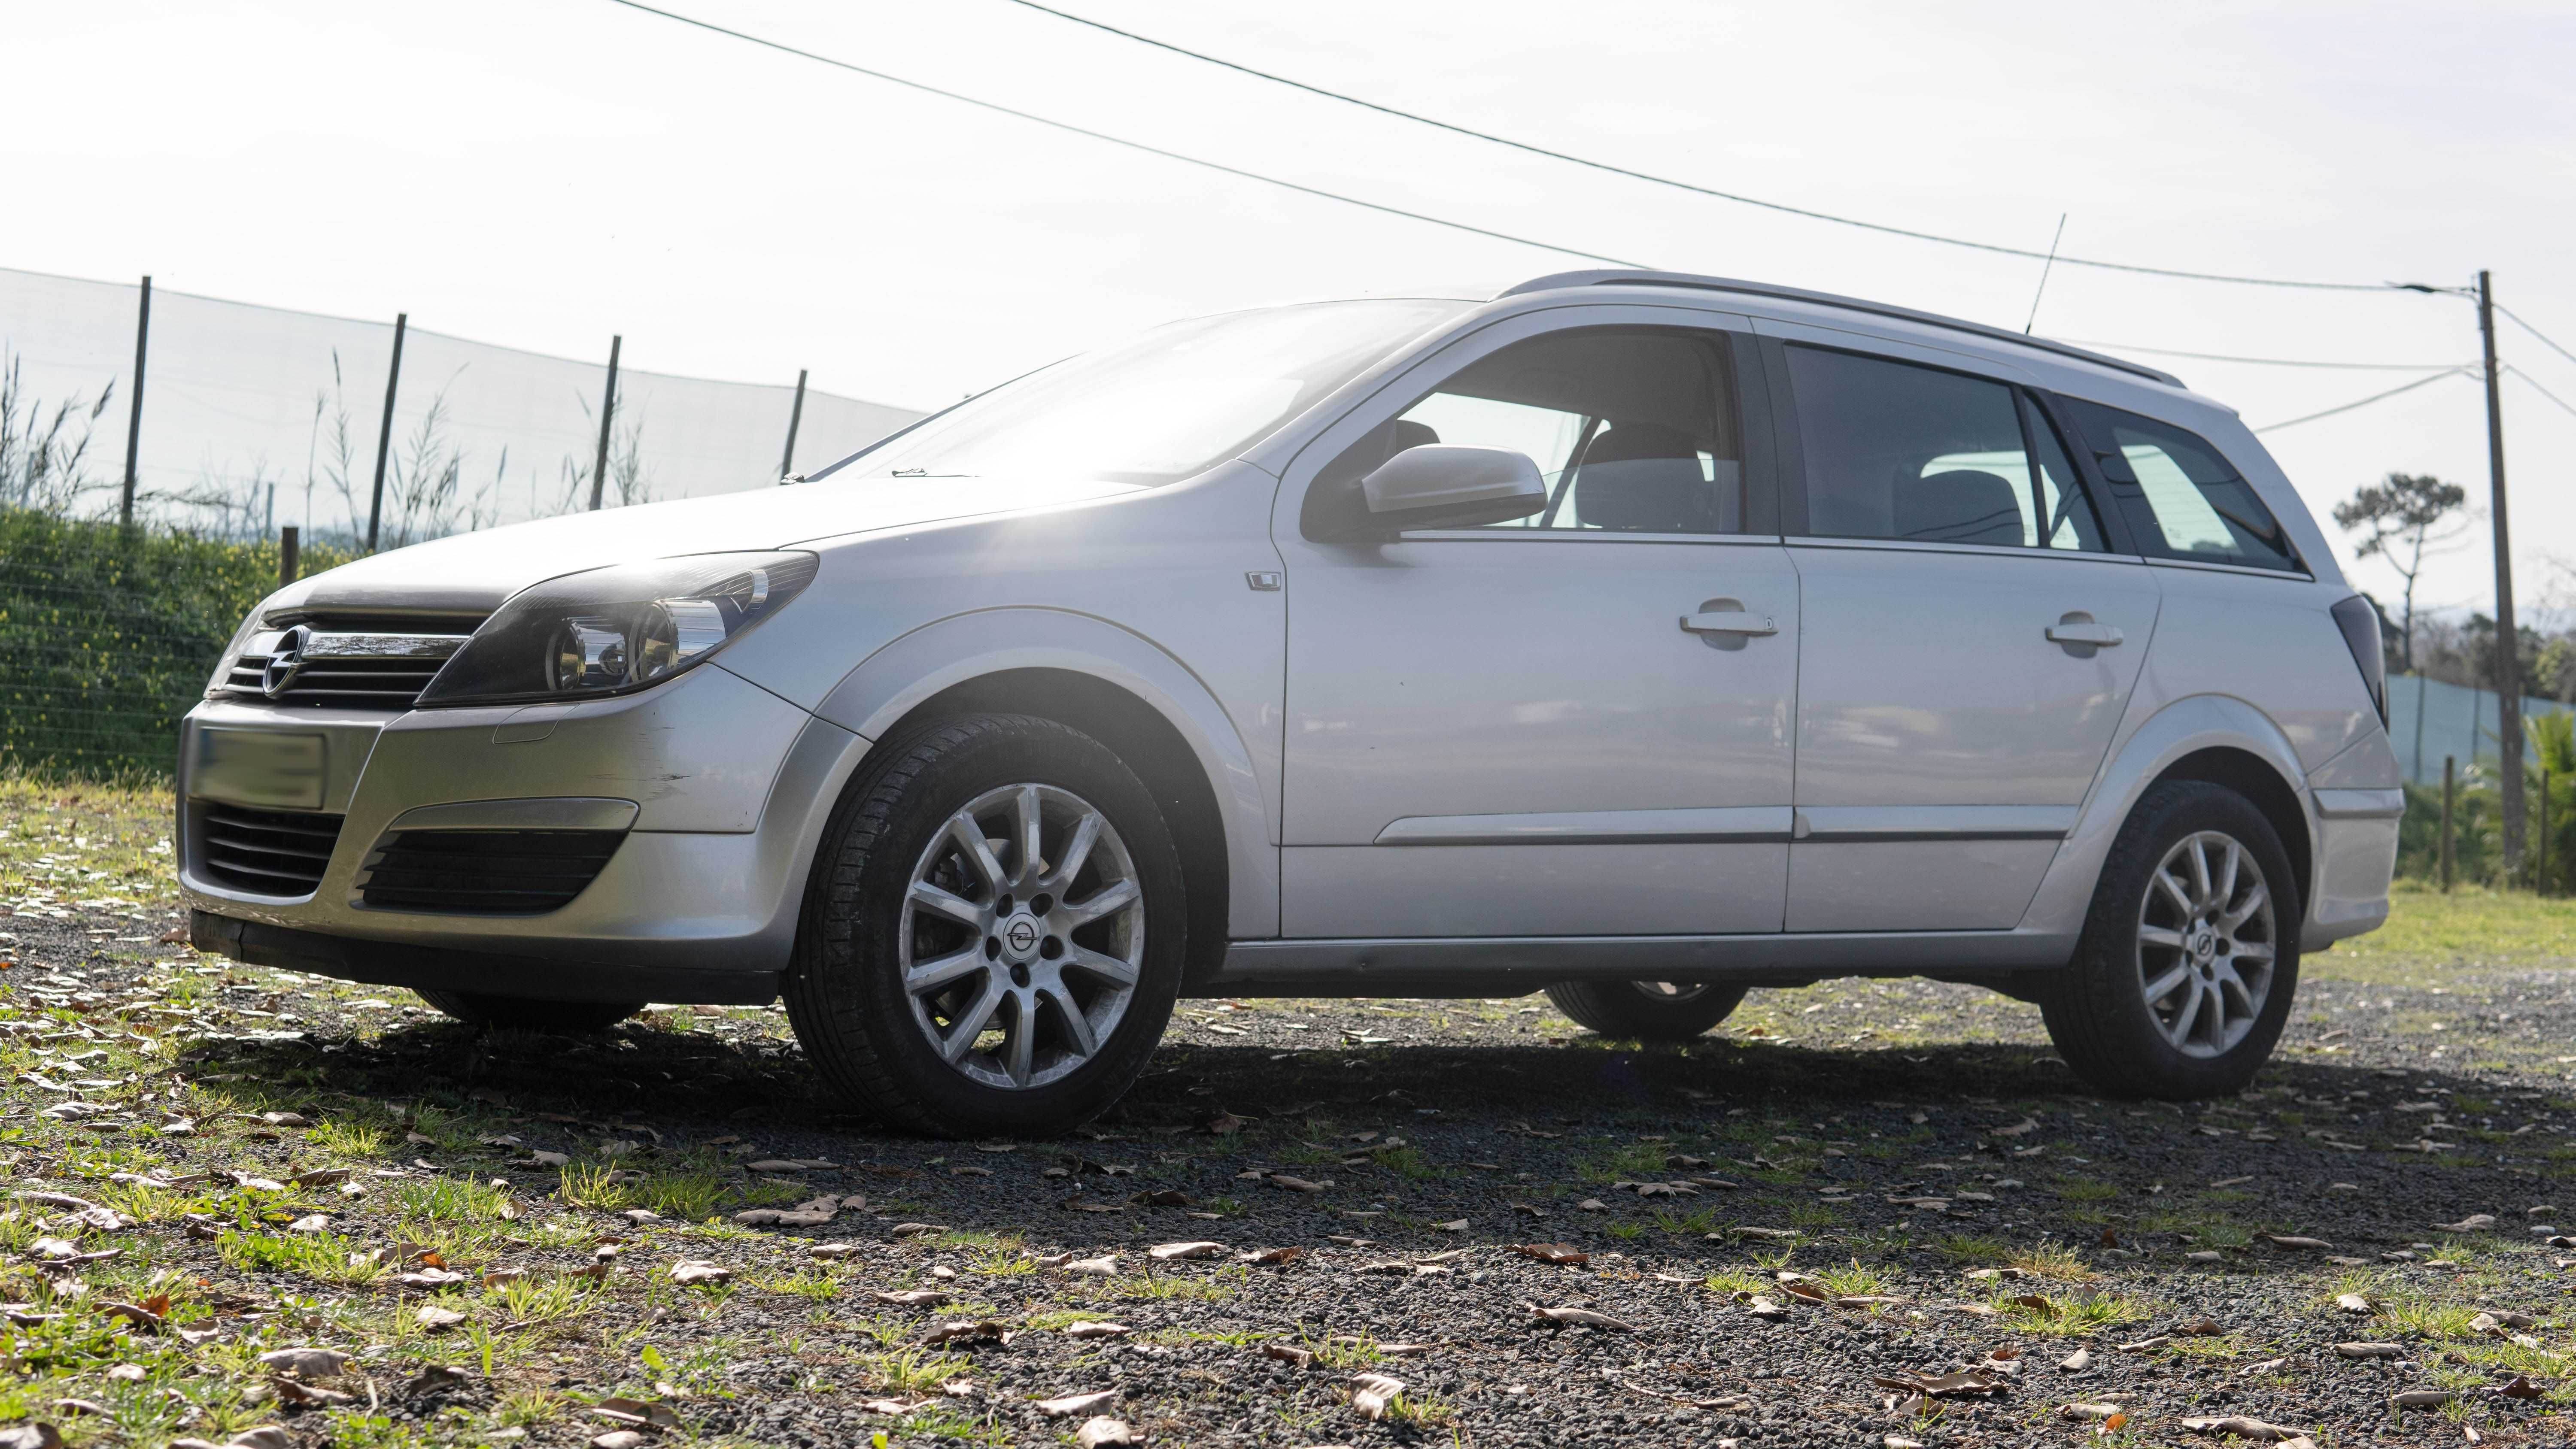 Opel Astra h 1.7 cdti 110 CV, 320.000 kms